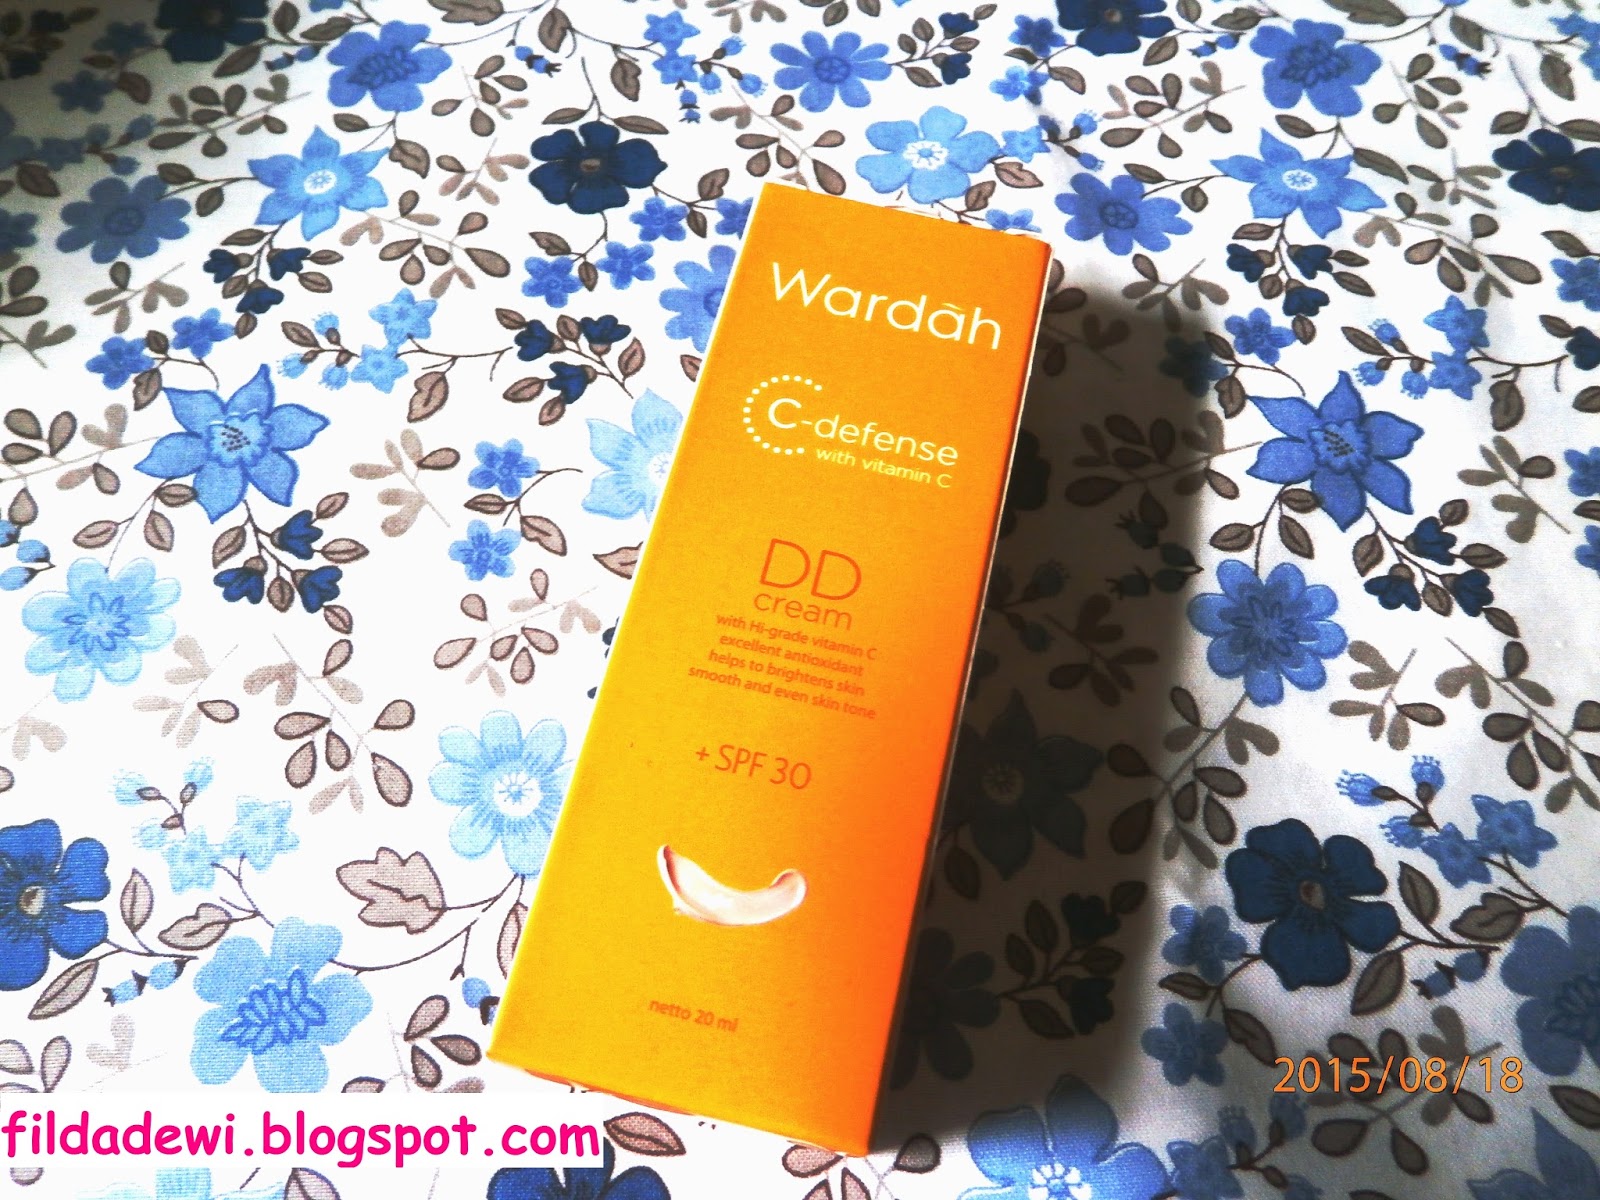 Wardah DD Cream C-defense with vitamin C | Filda Redstar